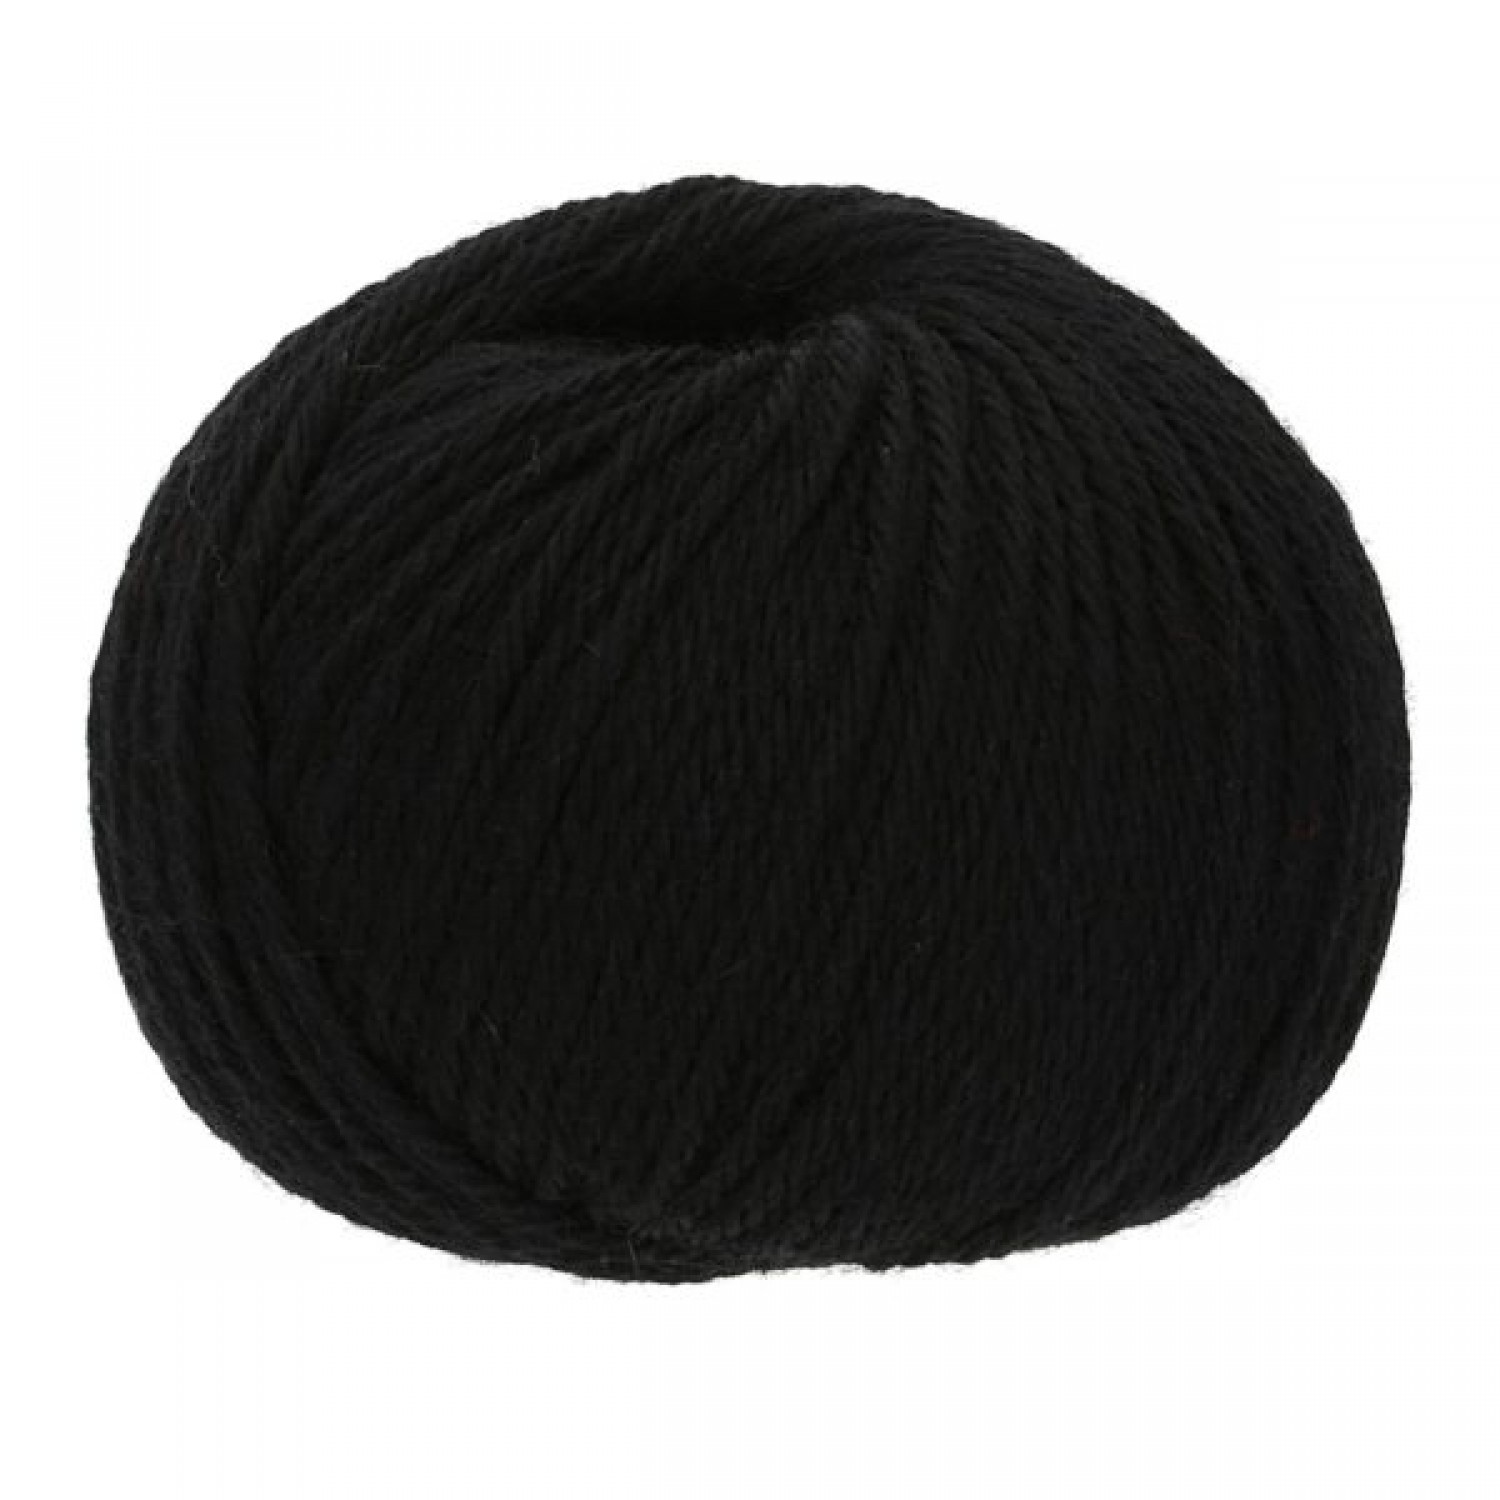 Baby Alpaca-Soft knit crochet yarn, 50g Black | Apu Kuntur